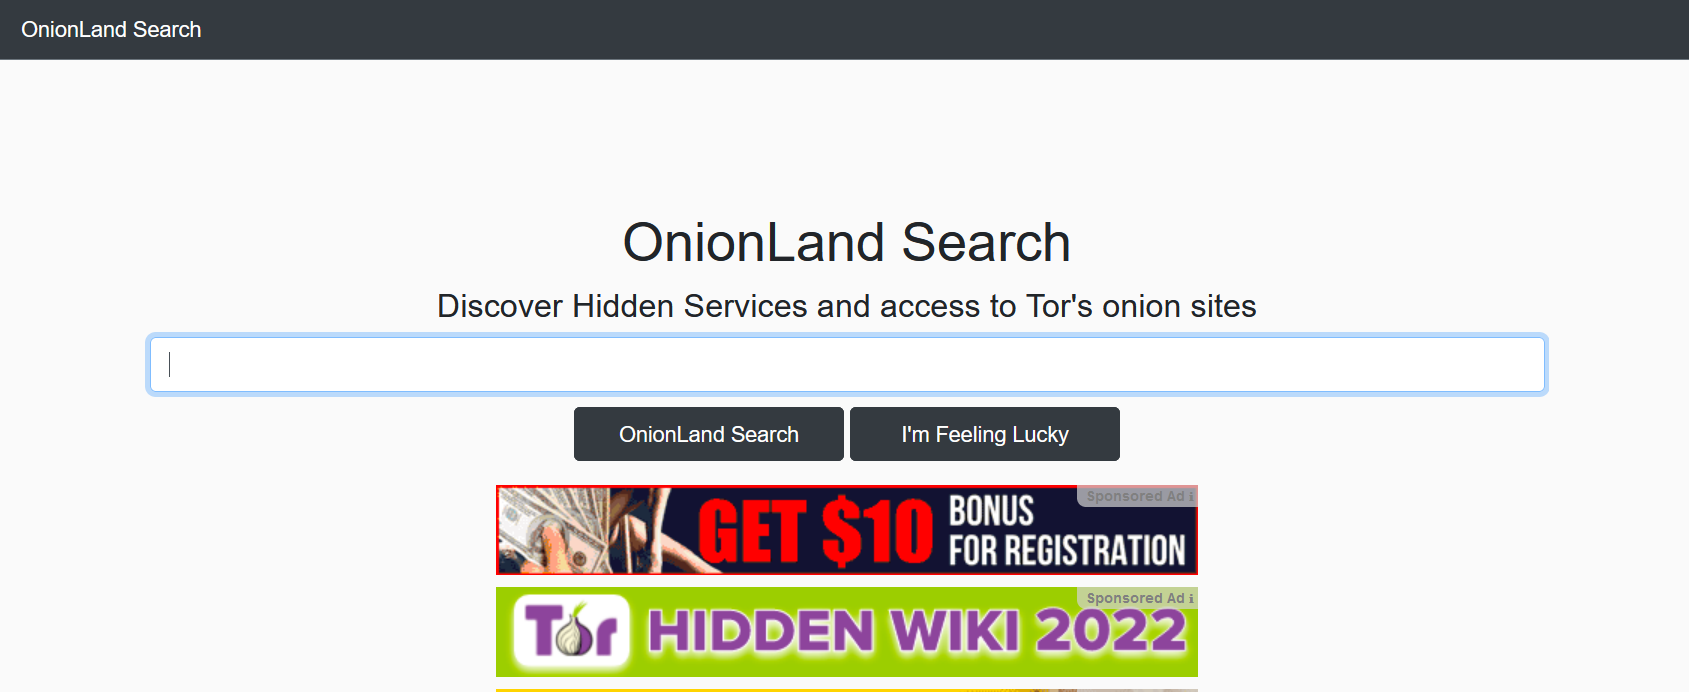 Dark web search engine OnionLand Search